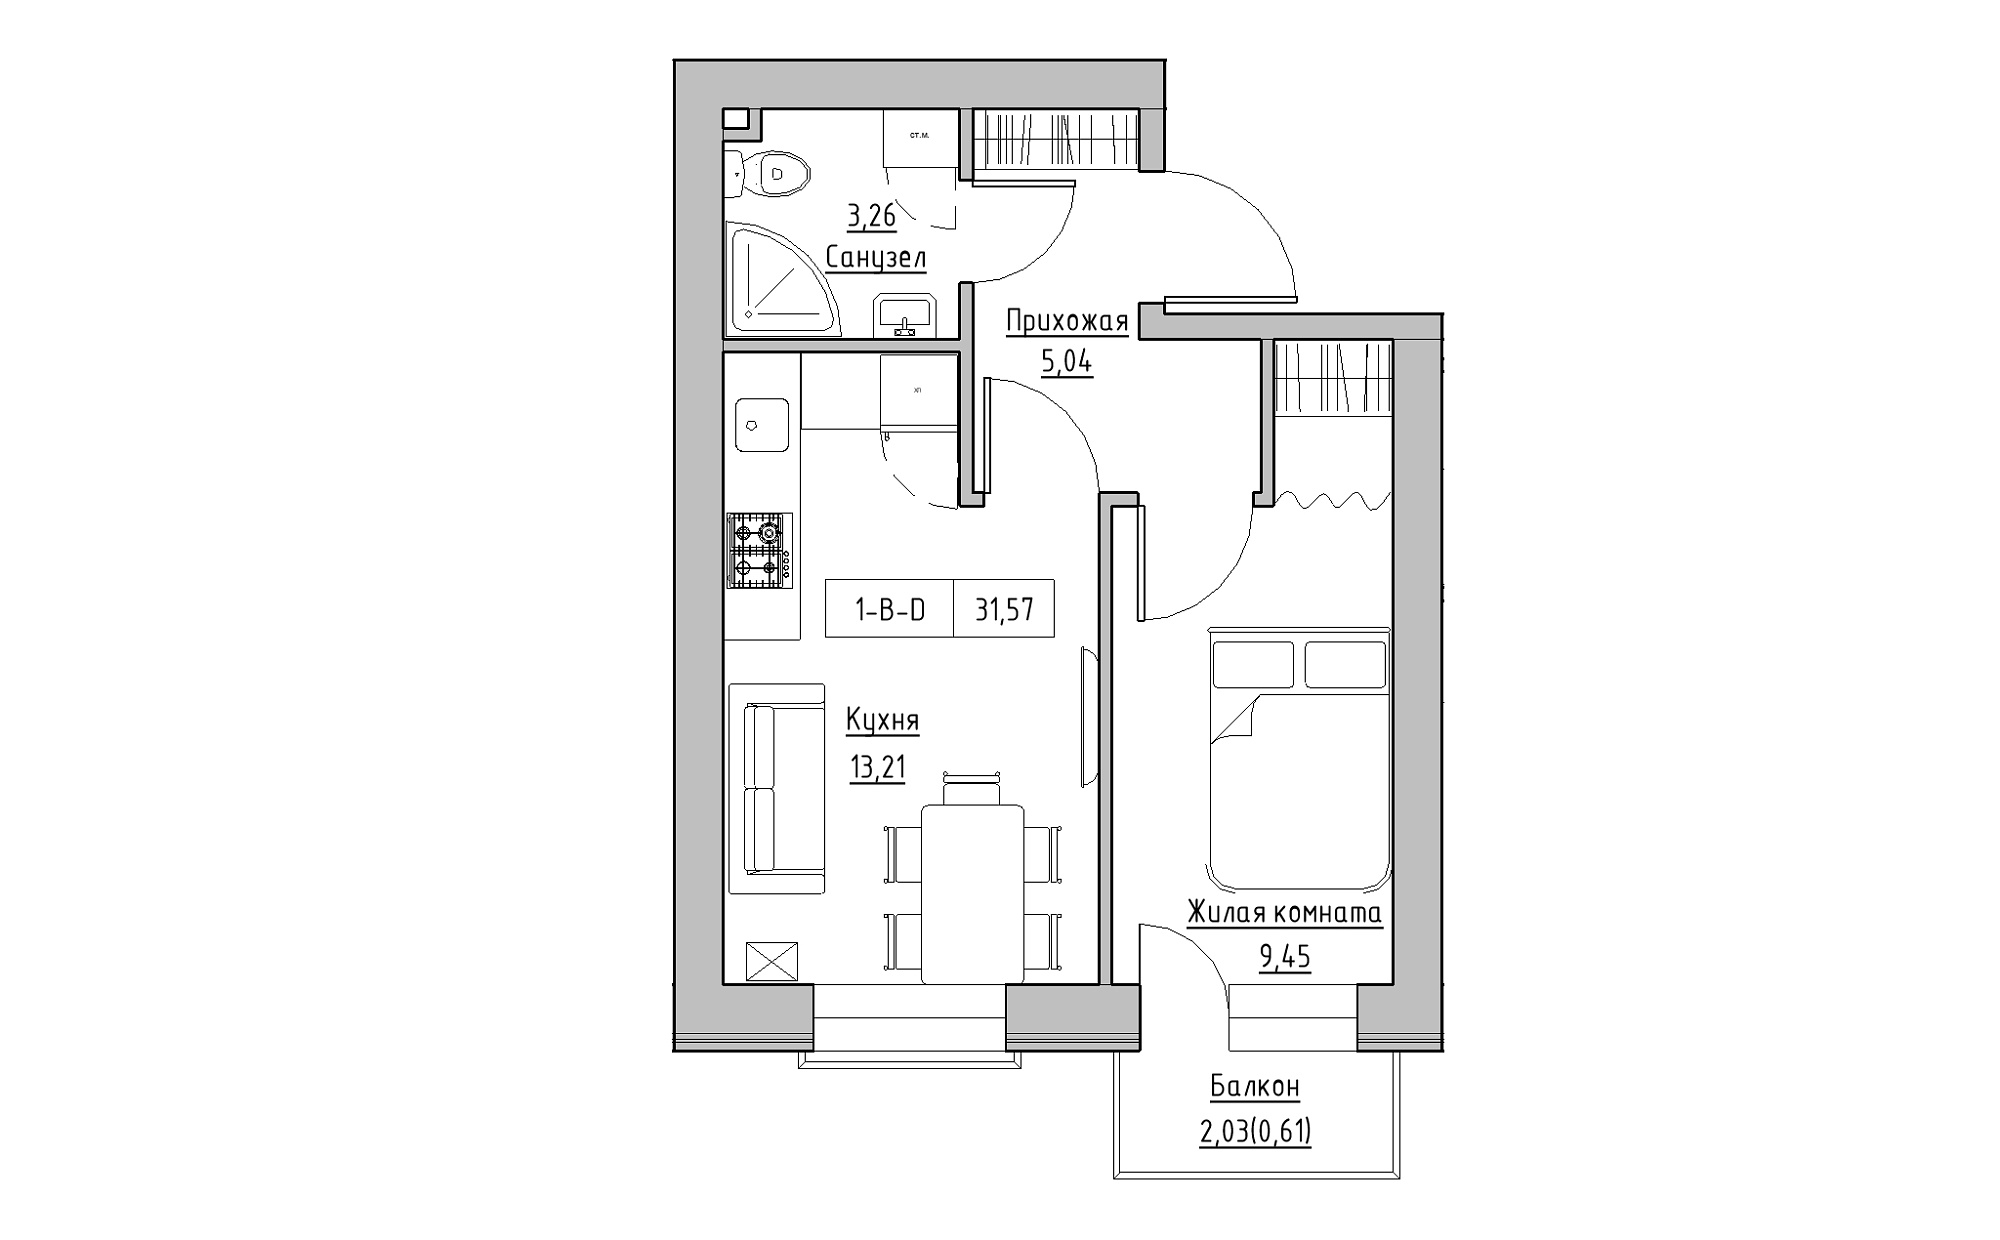 Planning 1-rm flats area 31.57m2, KS-022-03/0003.